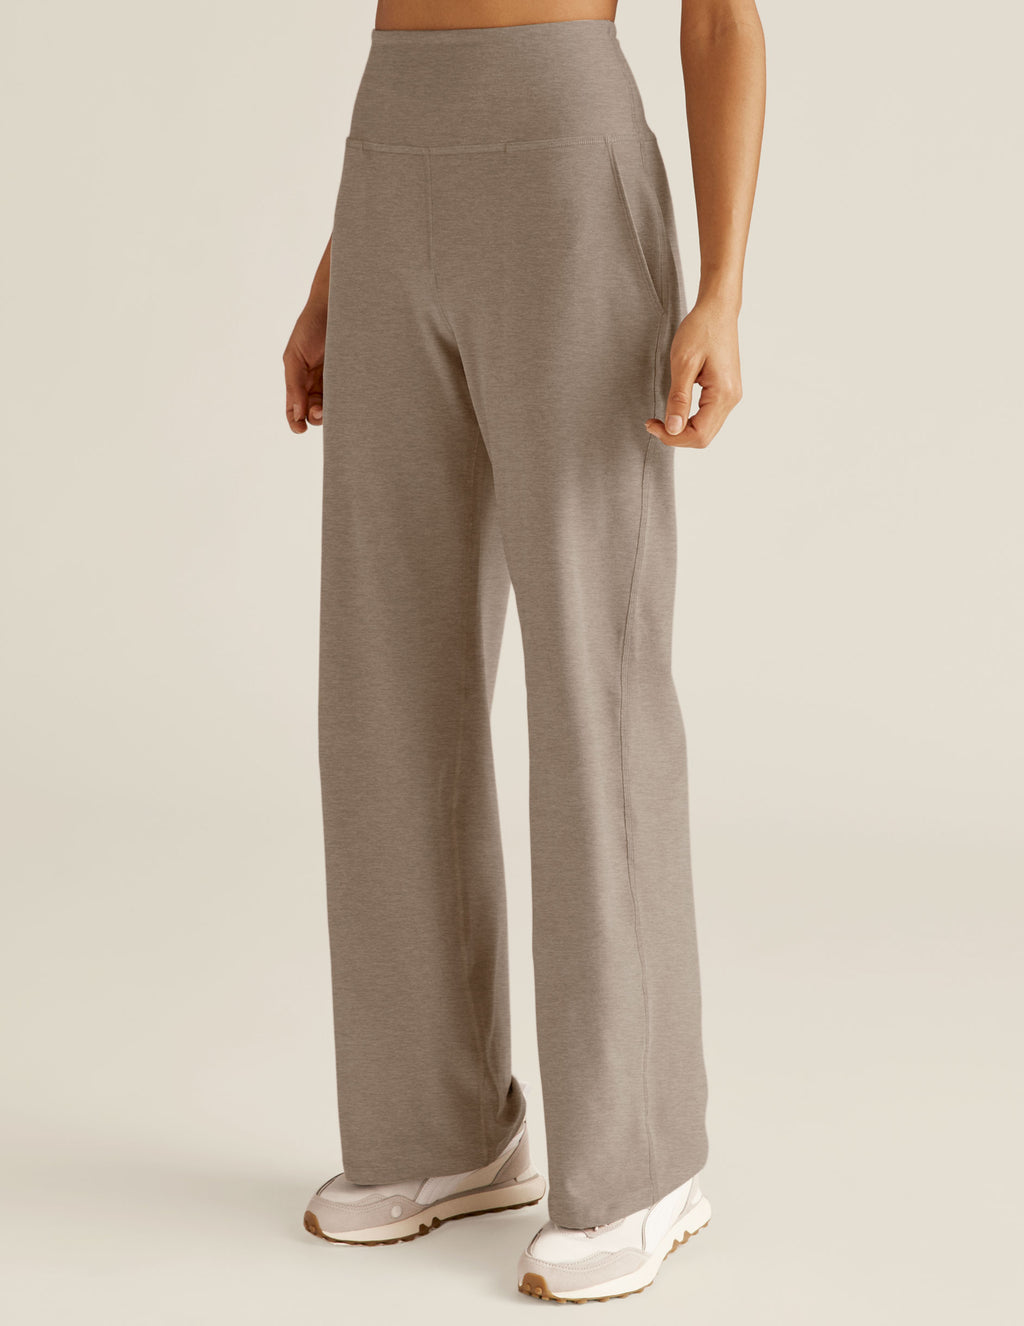 PhoneSoap Womens Elastic Loose Casual Cotton Soft Yoga Sports Dance Harem  Pants plus Size Clothing Grey 